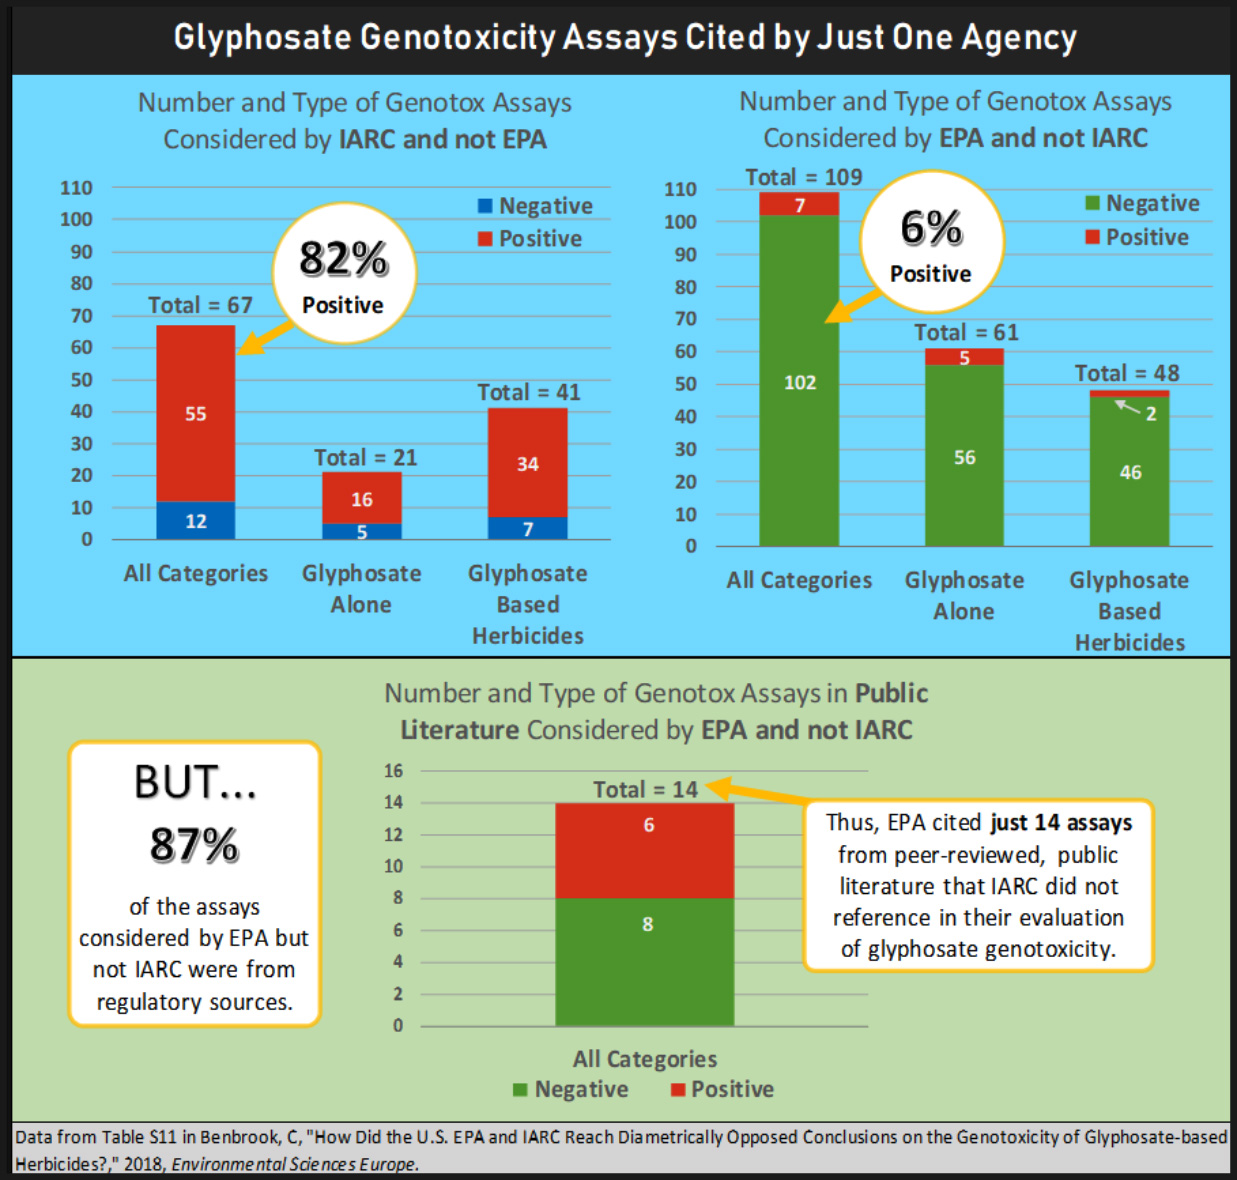 Glyphosate Genotoxicity Assay cited by just one agency